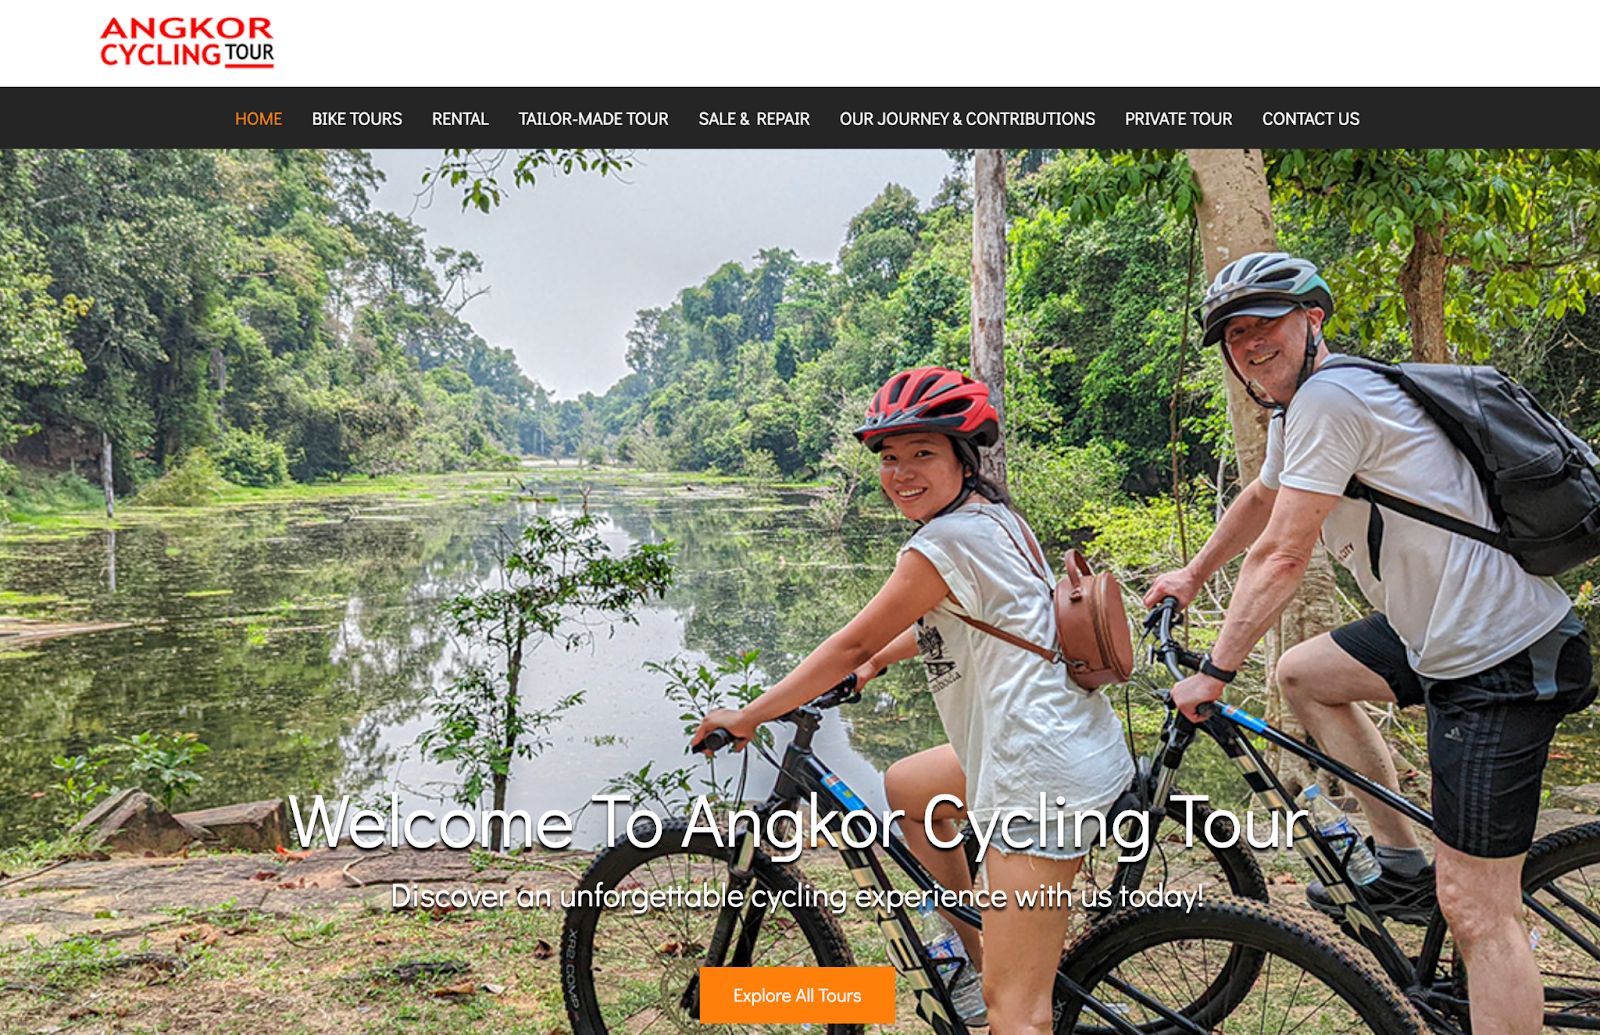 angkor-cycling-tour-asia-domain-name